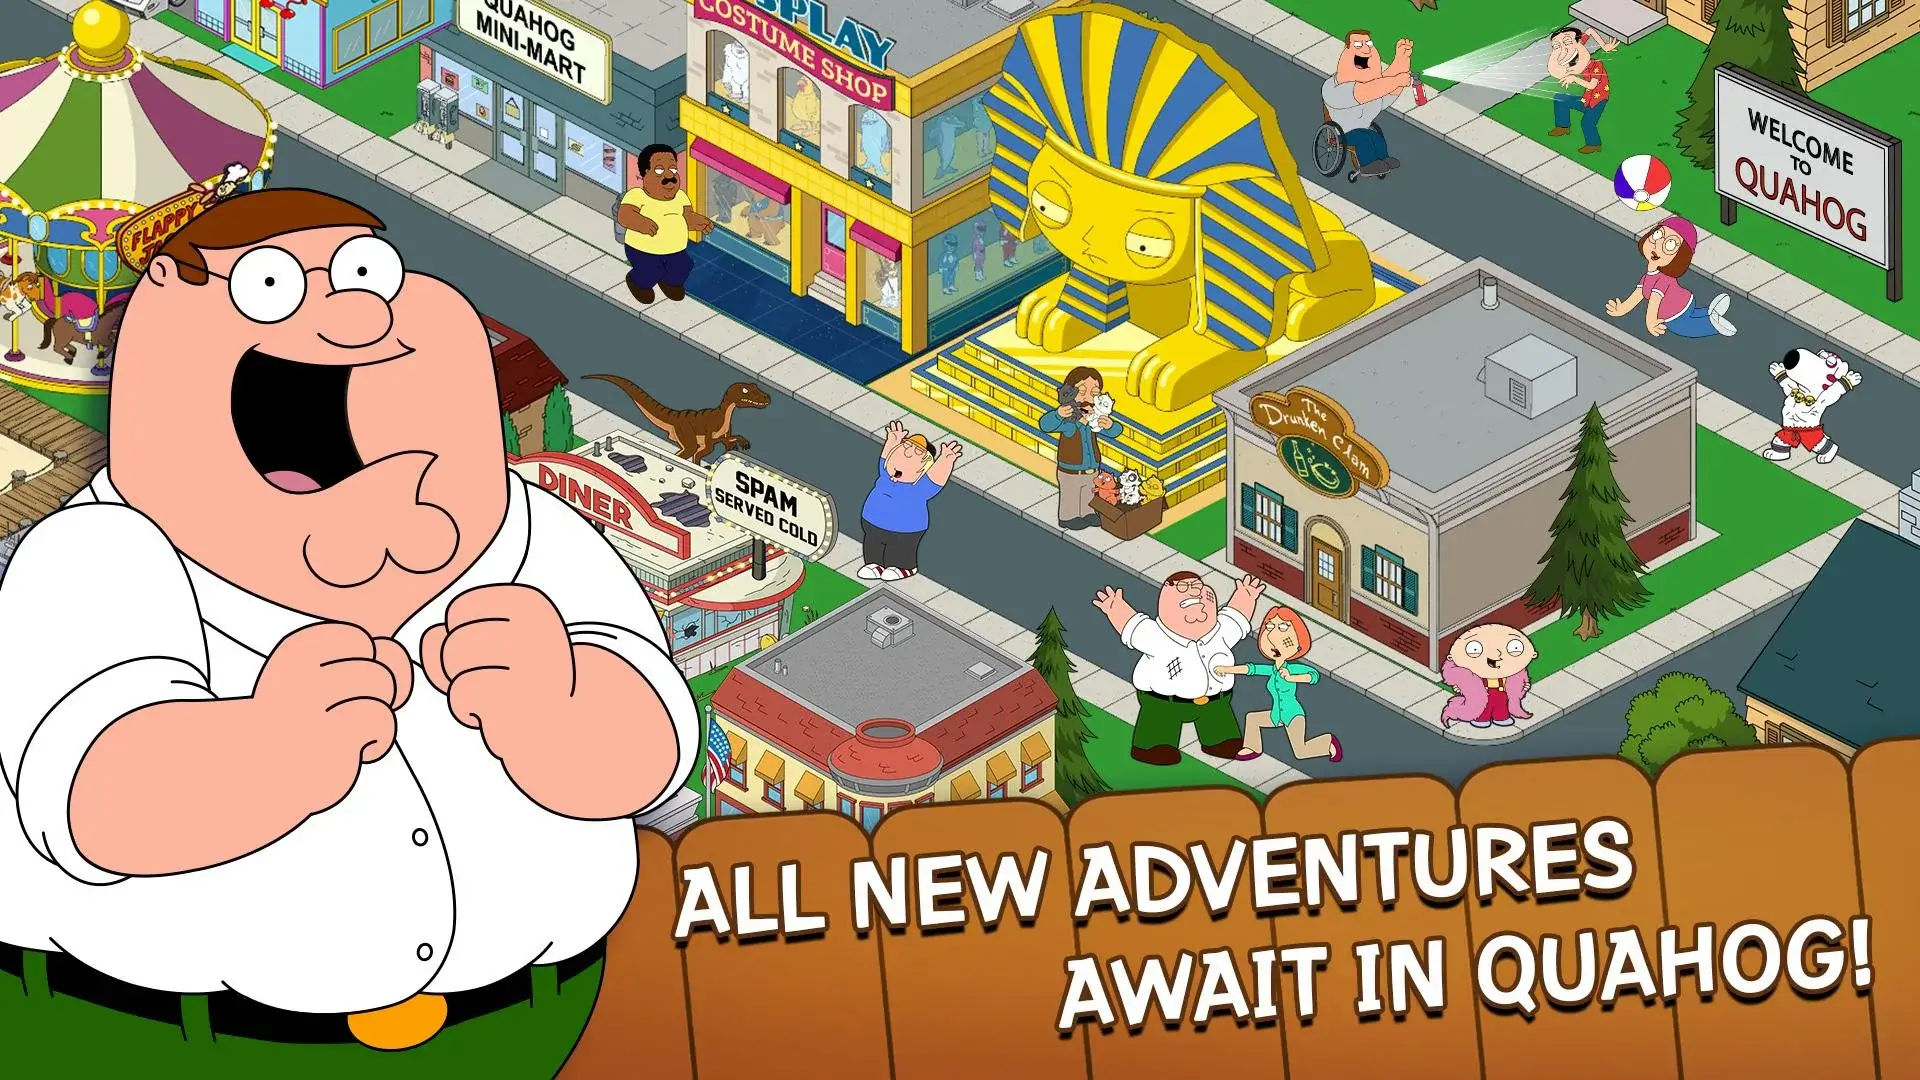 Family Guy MOD APK